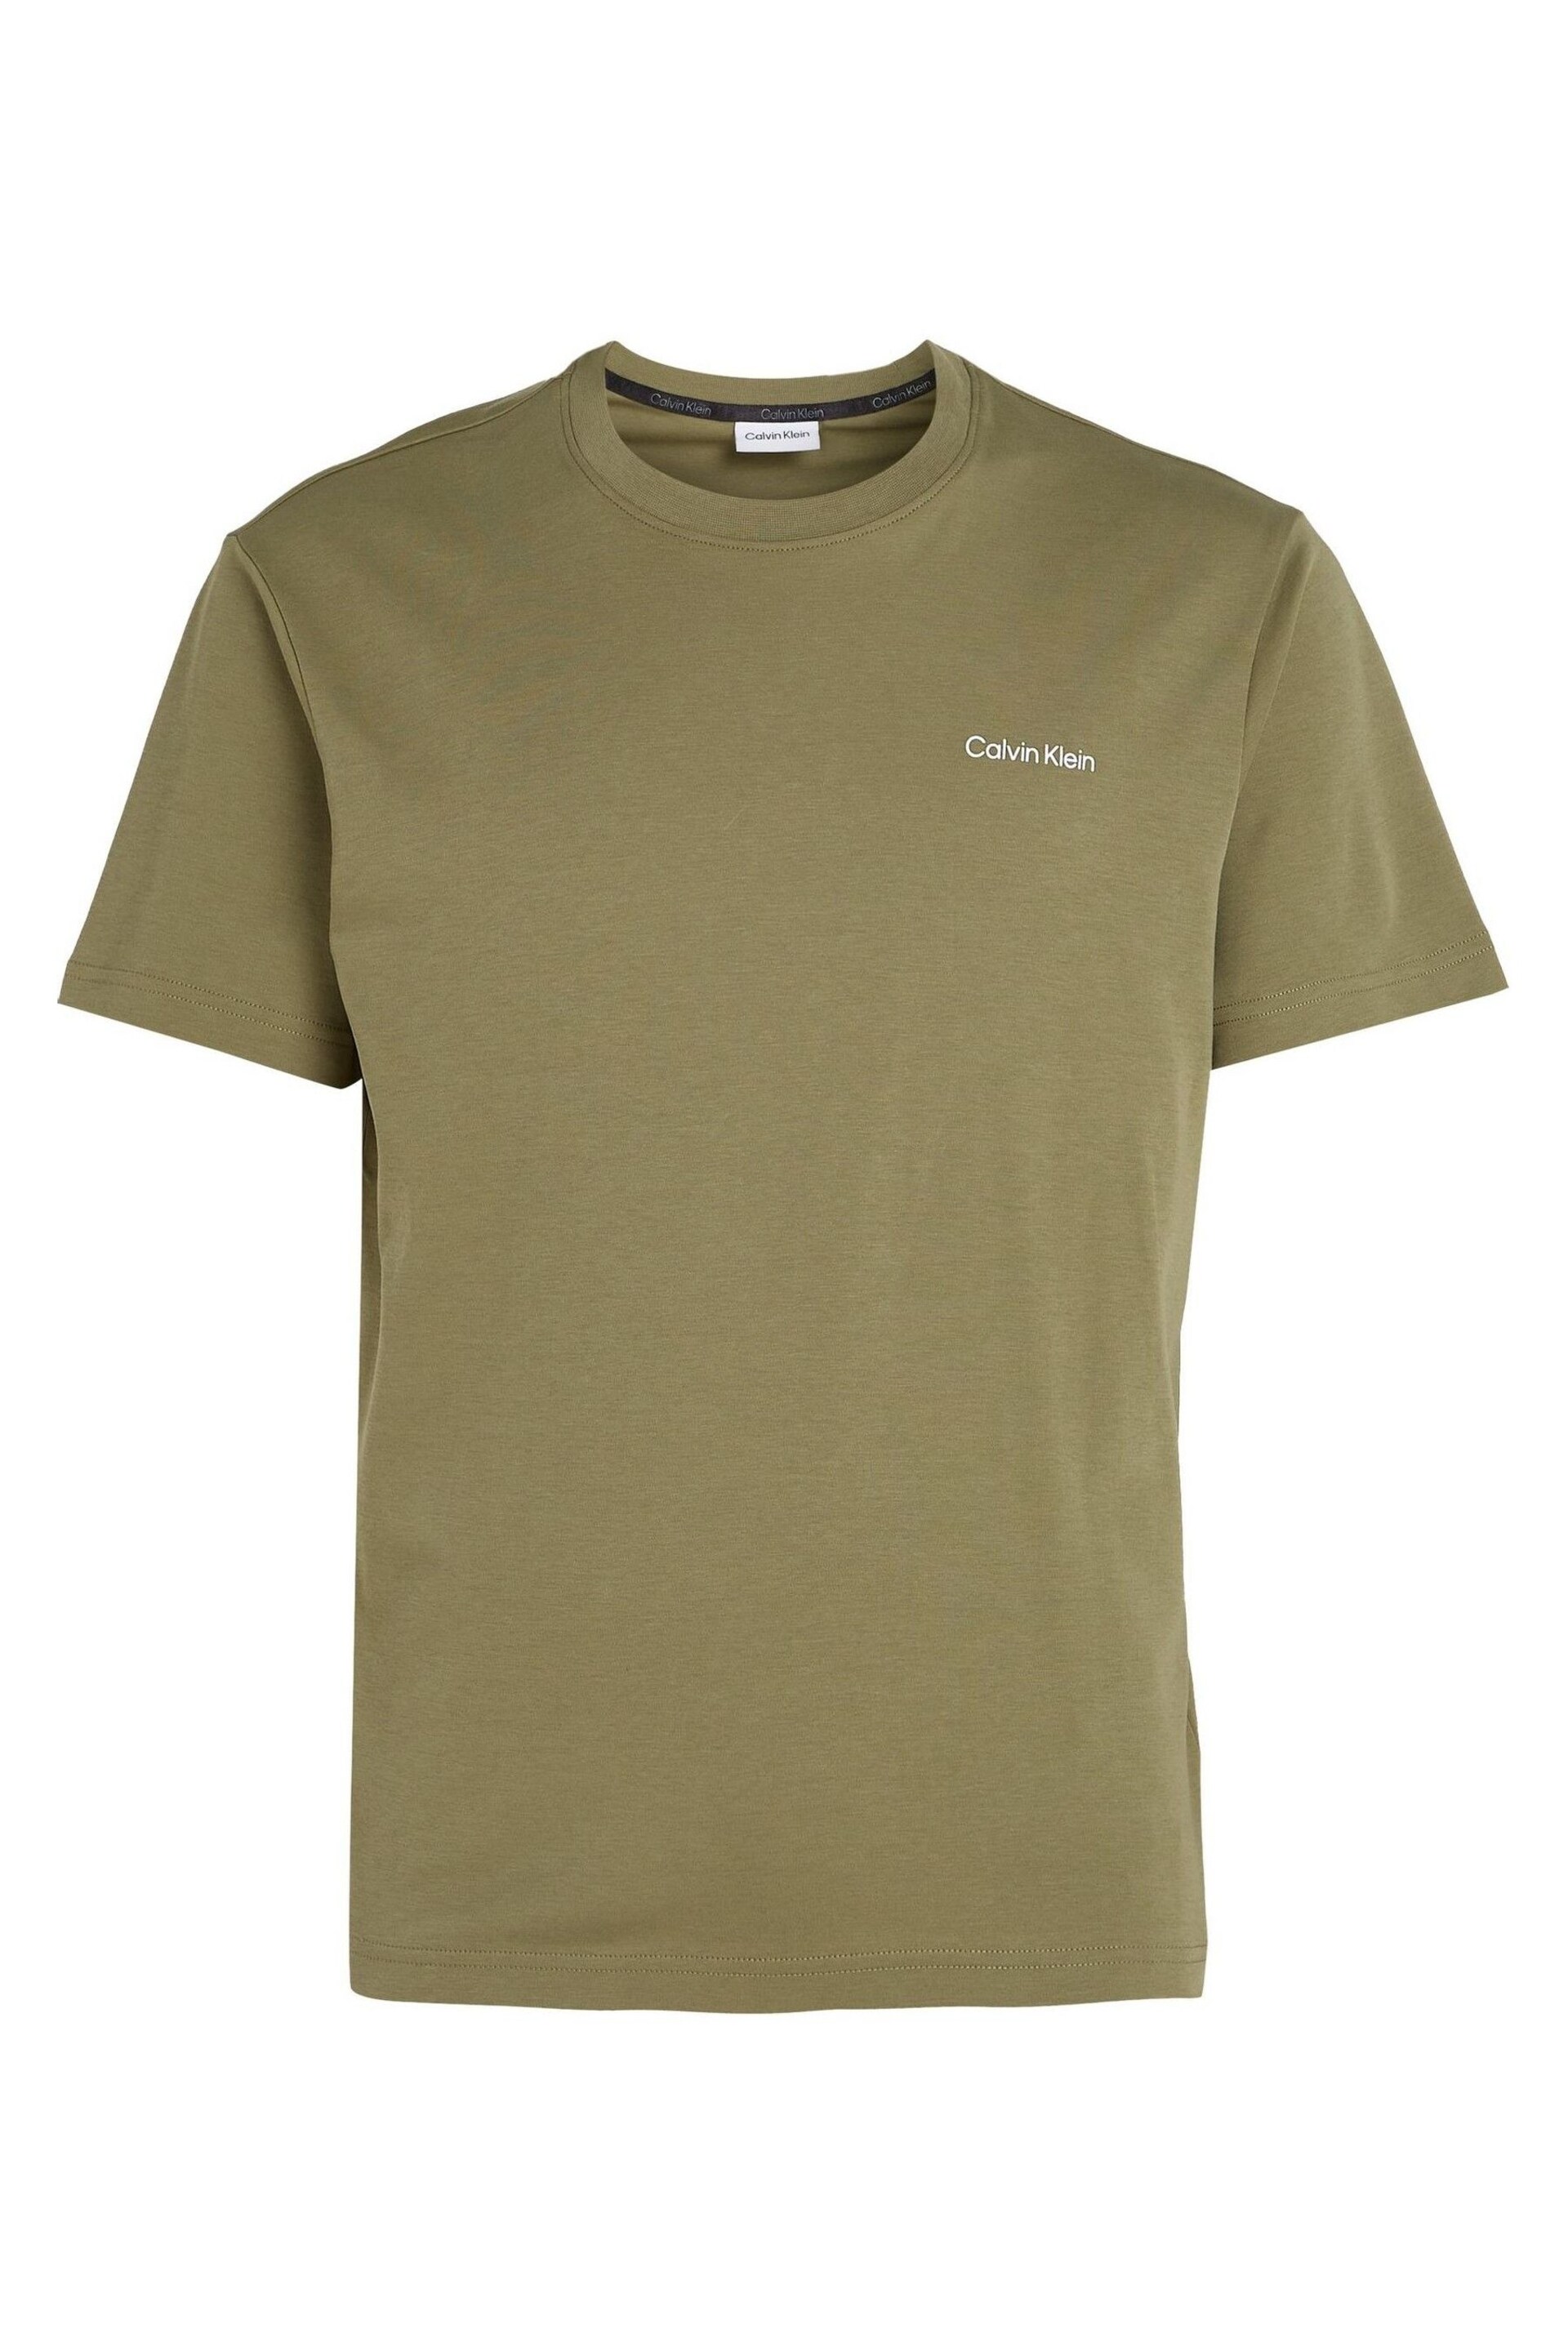 Calvin Klein Green Logo Interlock T-Shirt - Image 4 of 5